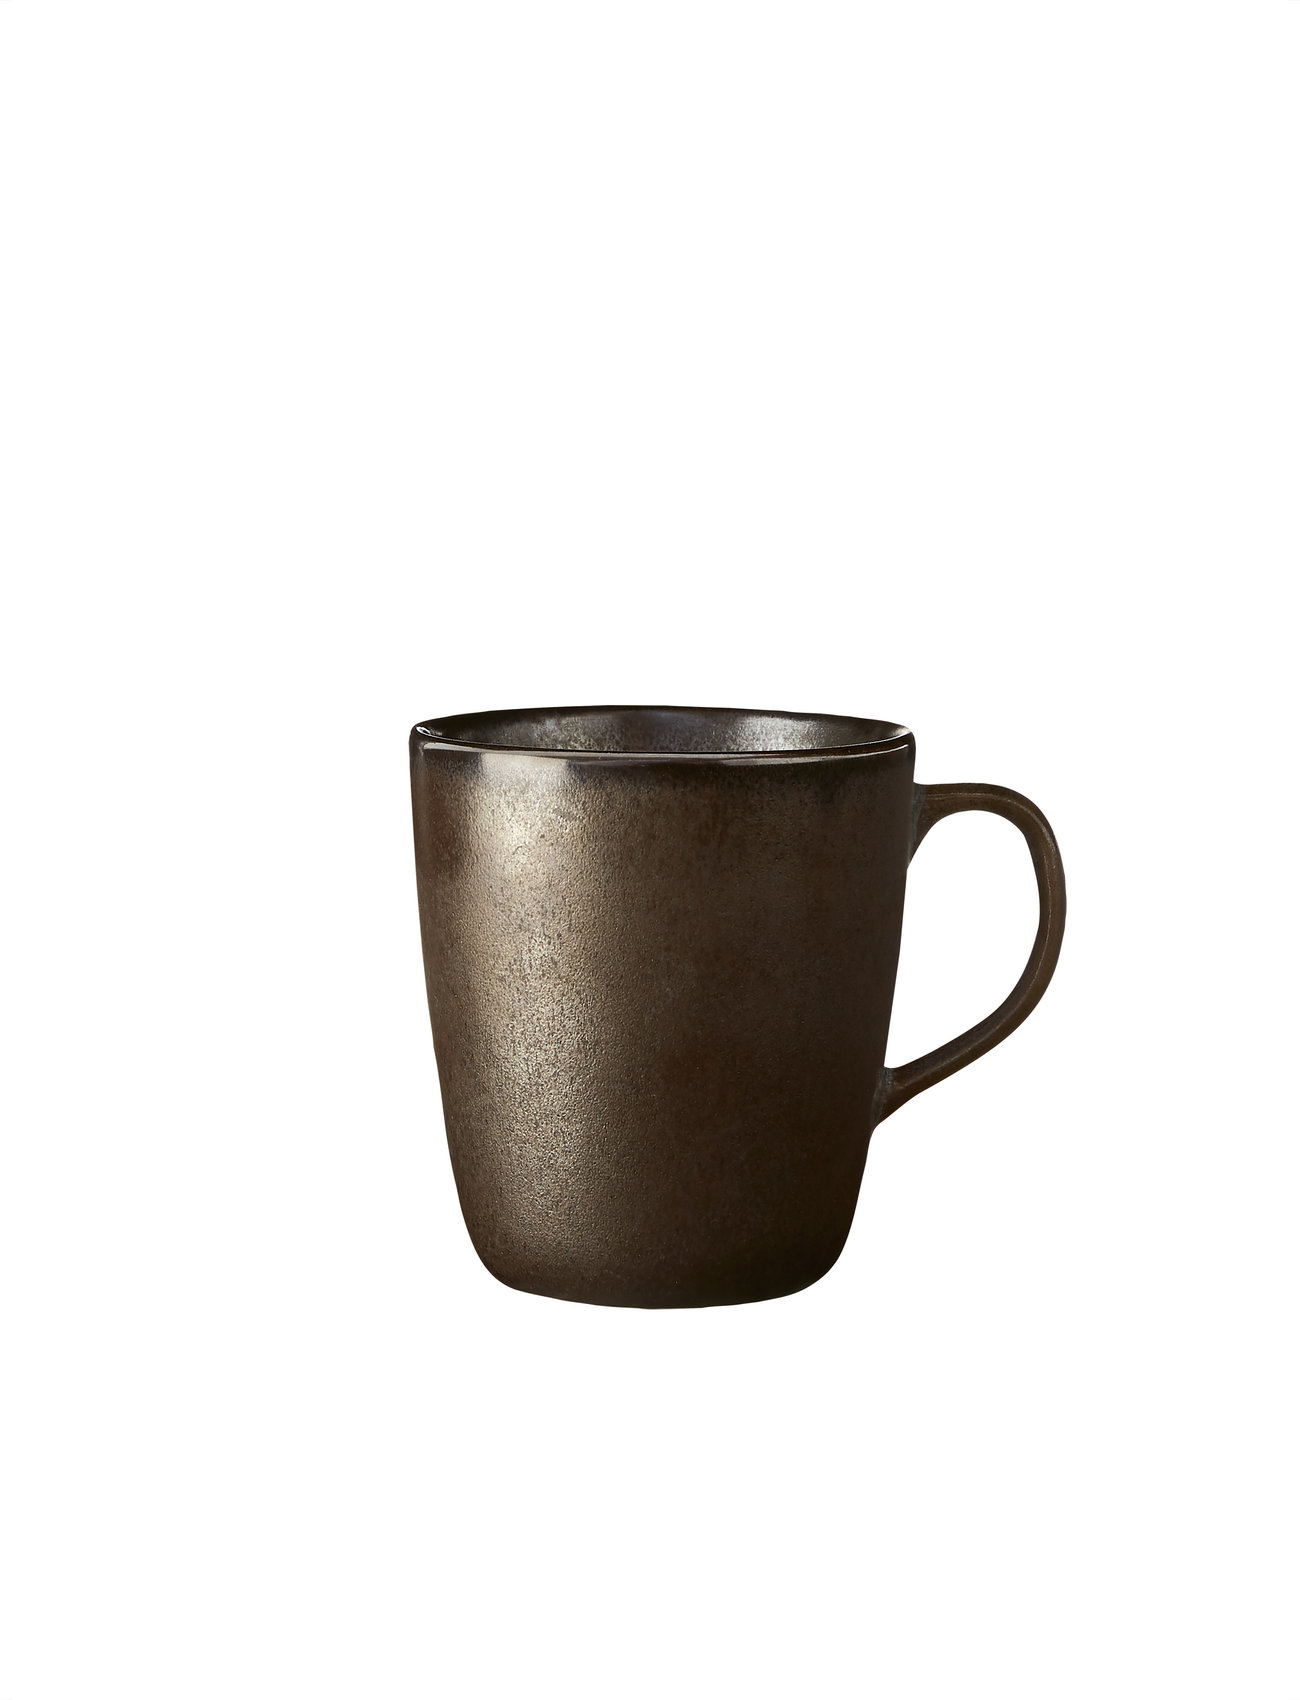 Raw Metallic Brown - Wall Mug W Handle Home Tableware Cups & Mugs Coffee Cups Brown Aida